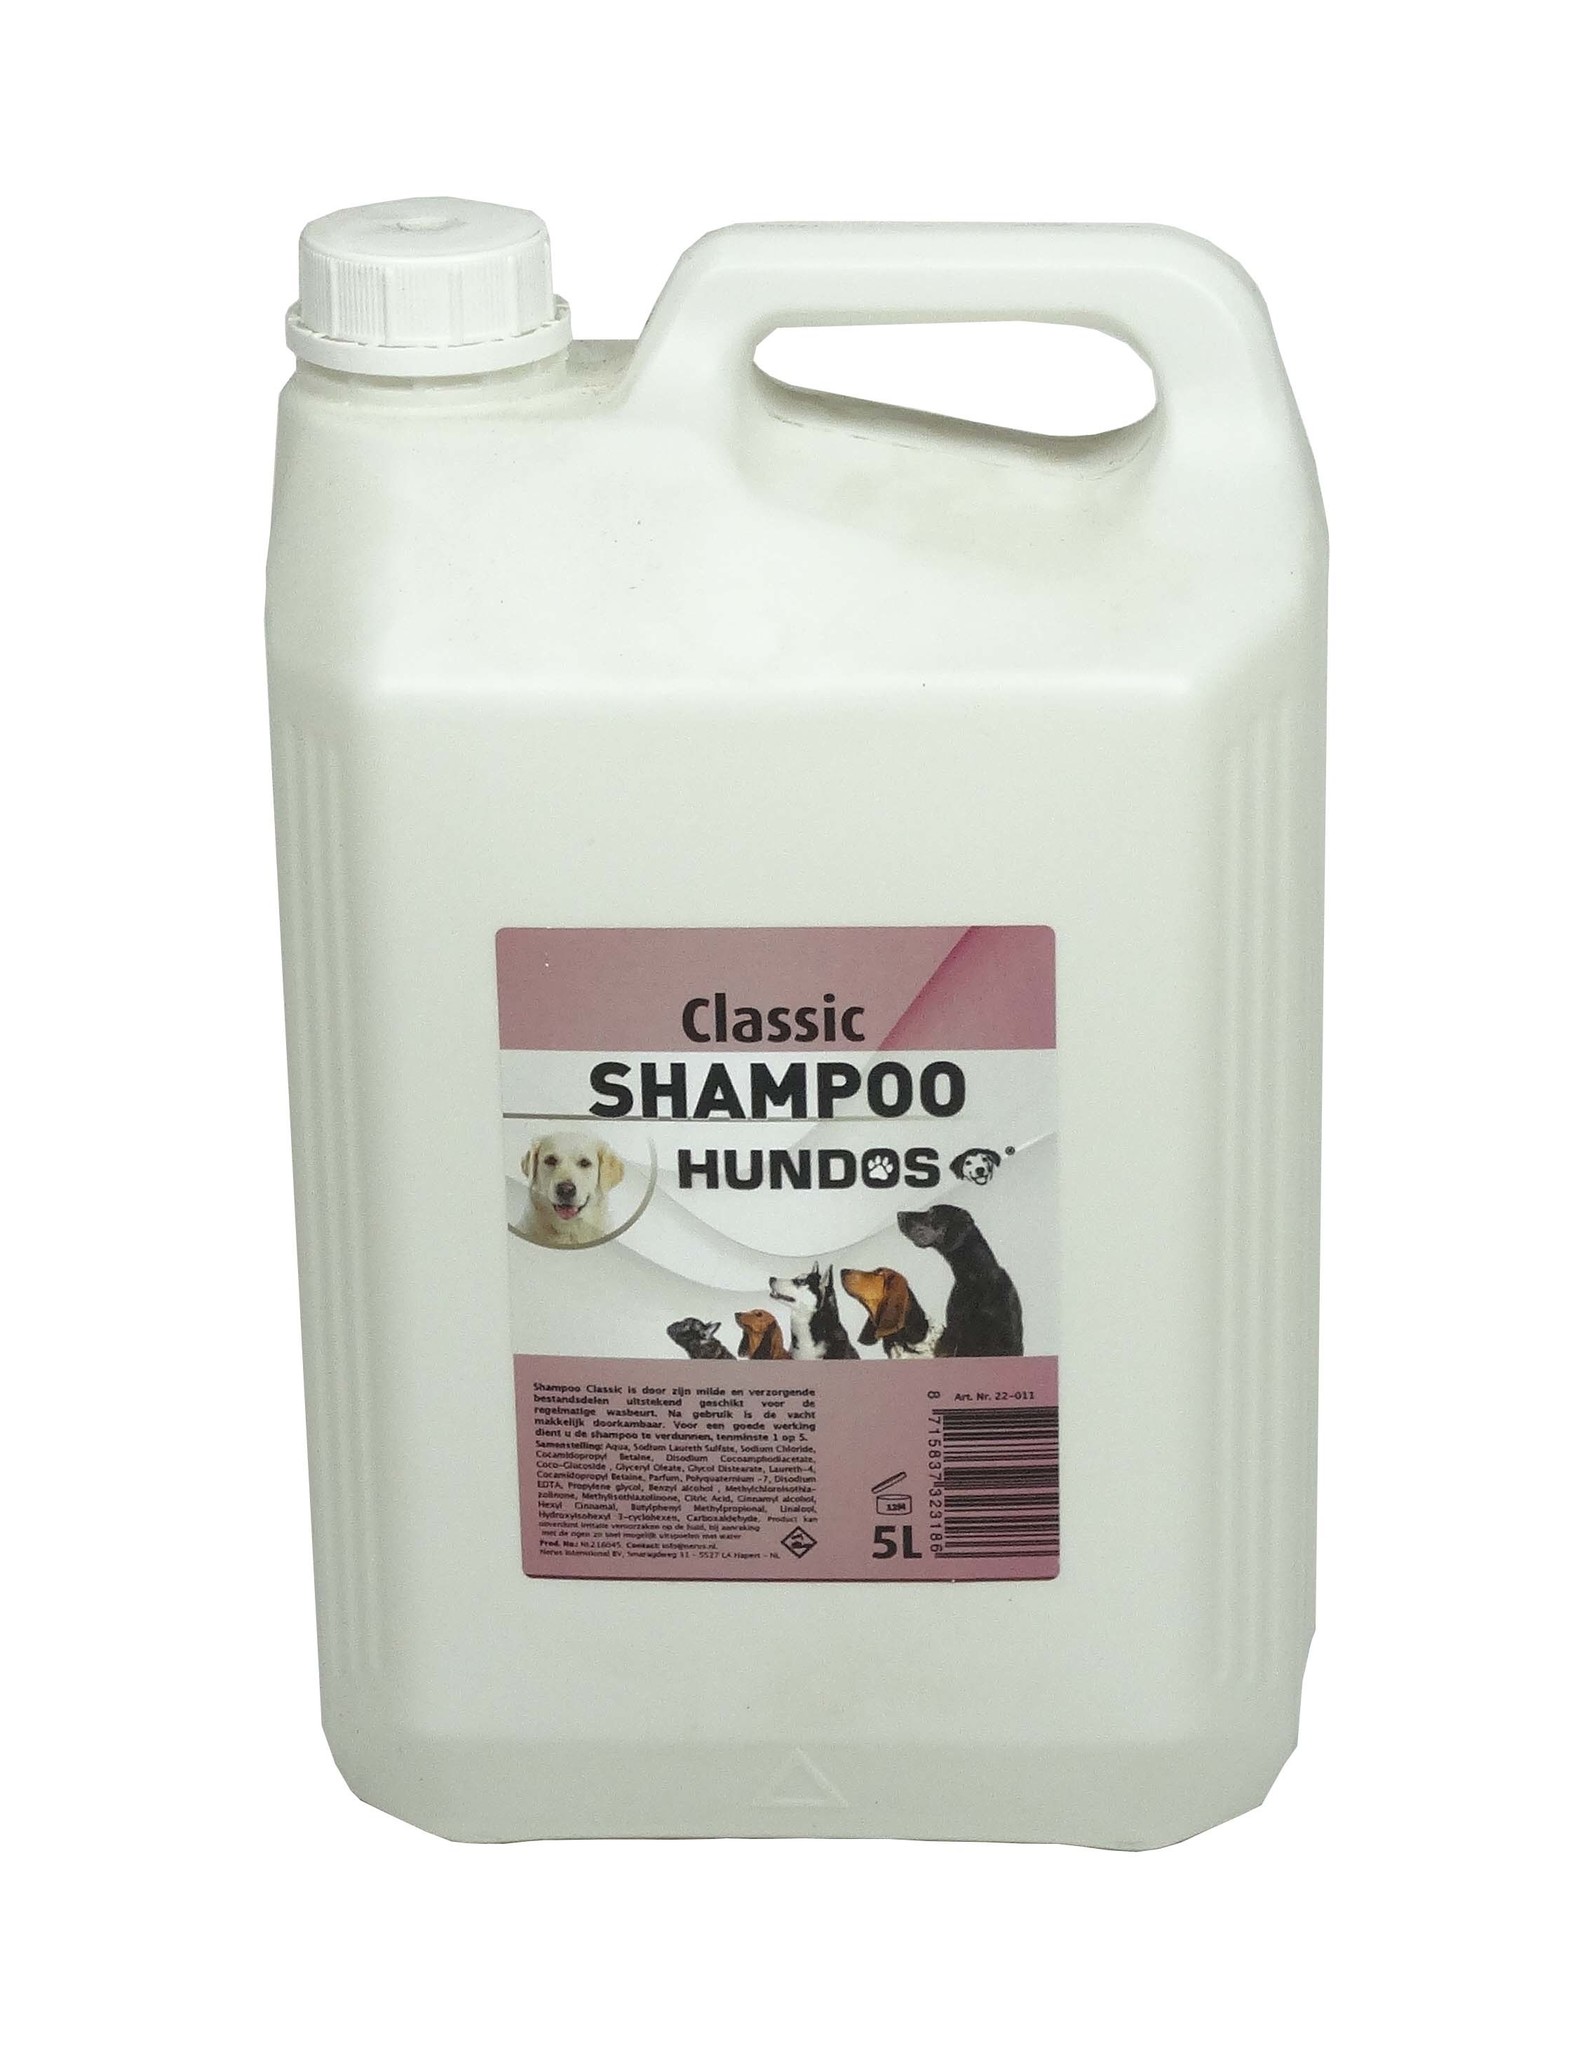 Tom Audreath uitvinden compact Hondenshampoo classic shampoo 5 liter - Autobench.nl